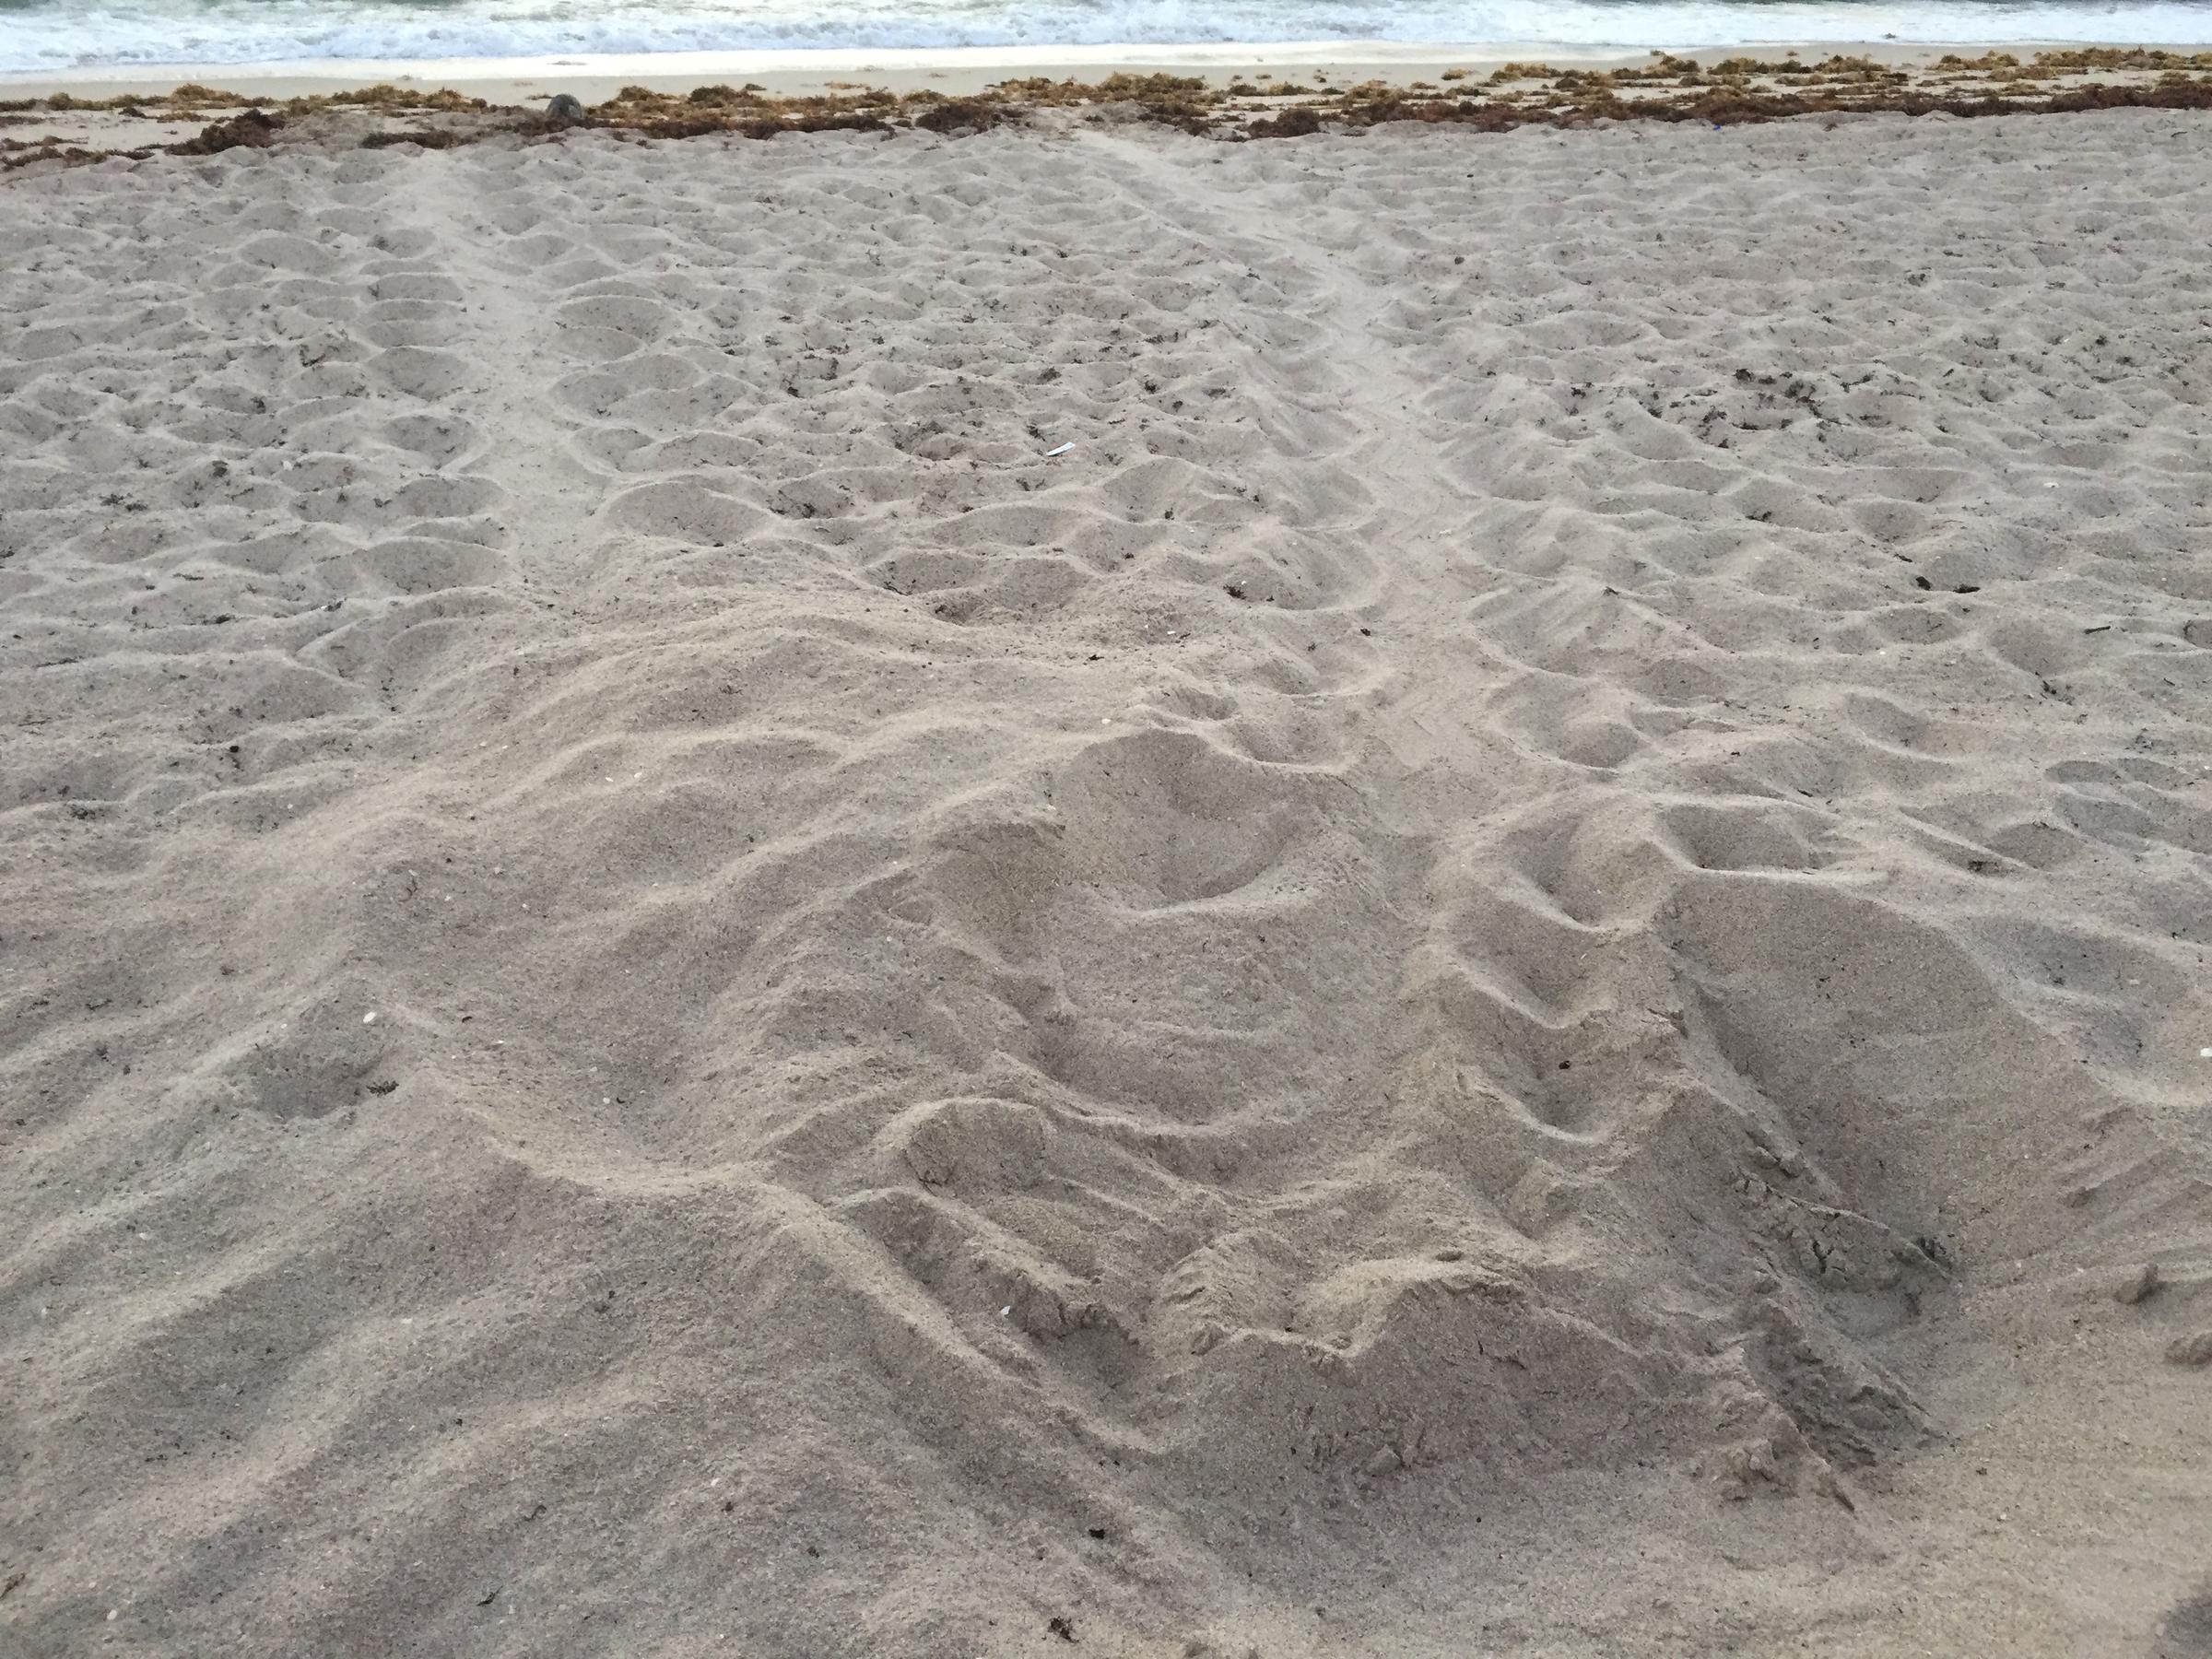 Broward Beaches Top 2,300 Turtle Nests Halfway Through Season | WLRN